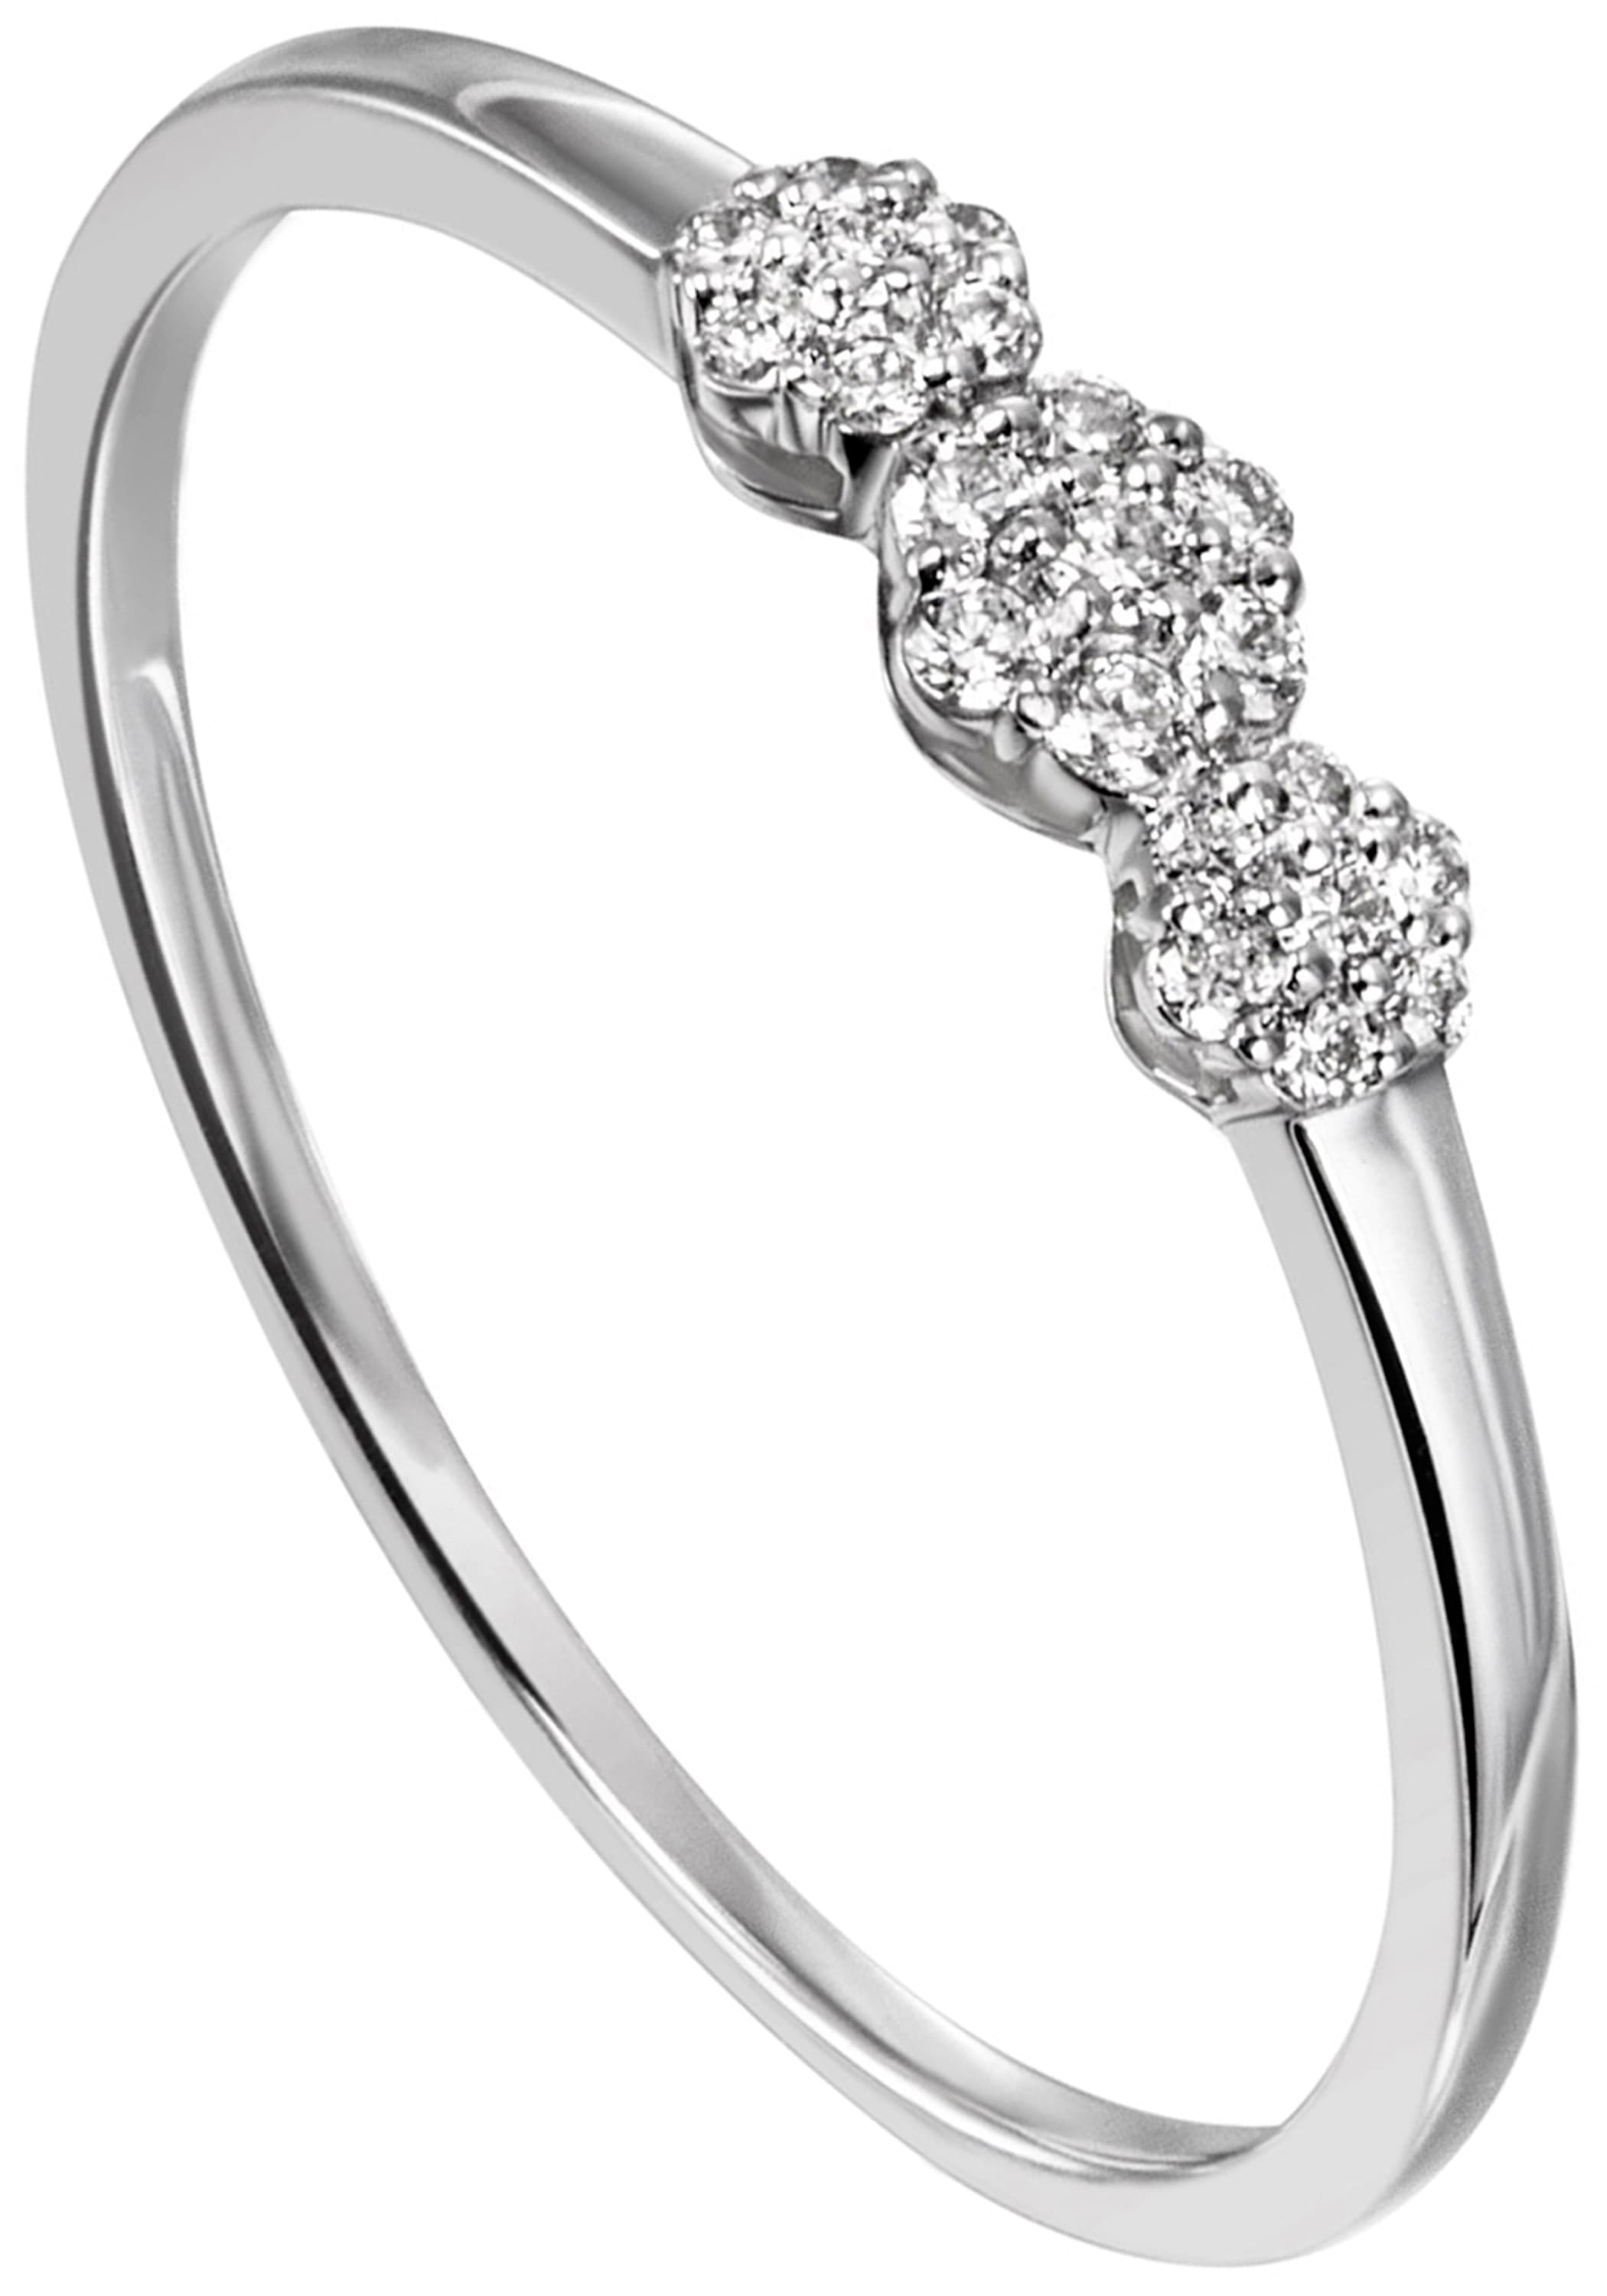 JOBO Fingerring Ring mit 21 Diamanten 585 Weißgold